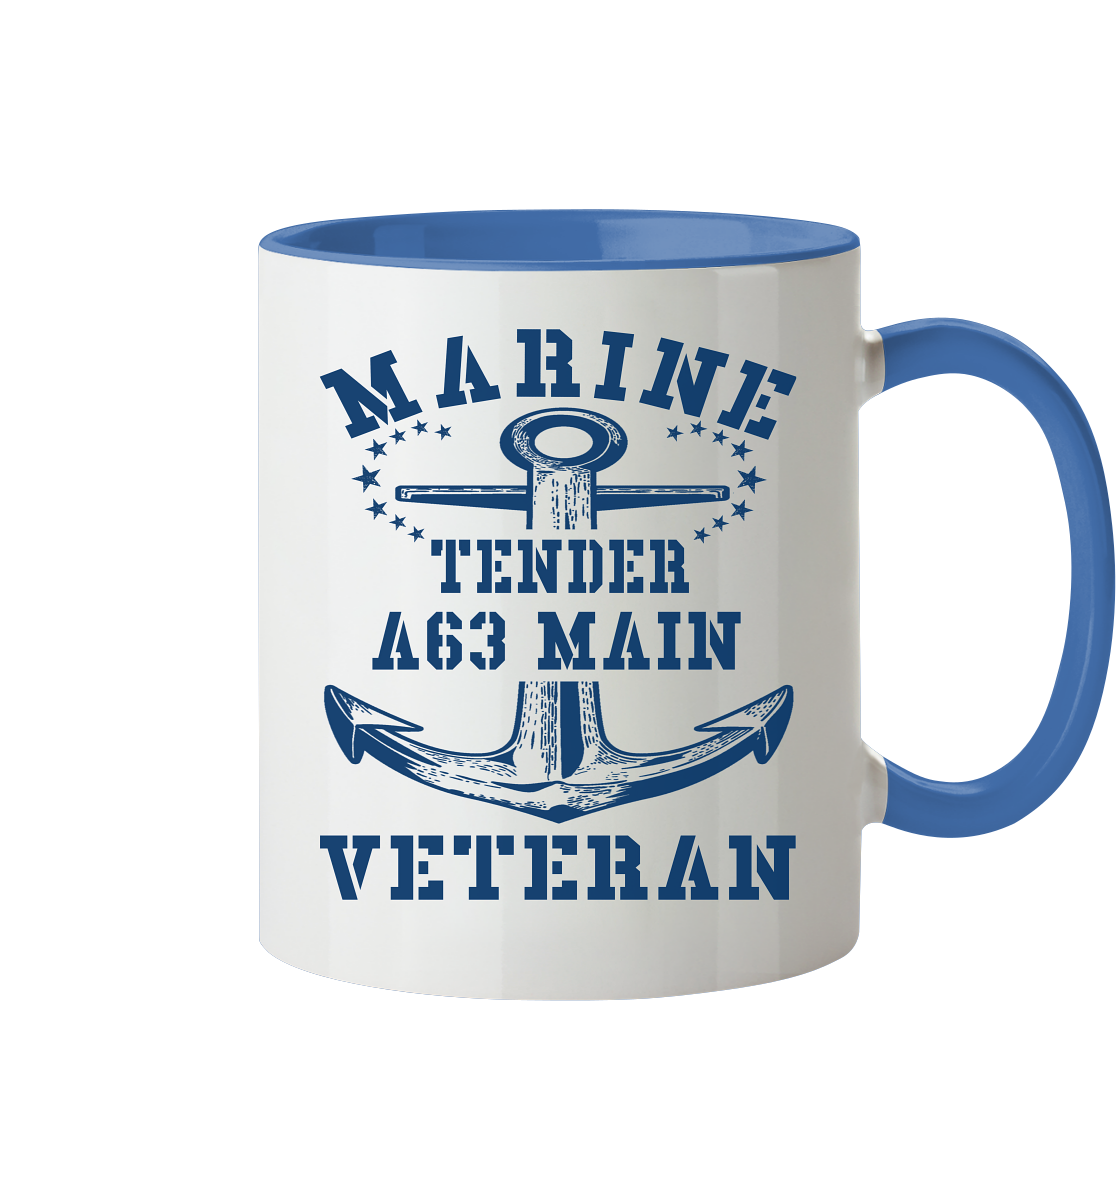 Tender A63 MAIN Marine Veteran - Tasse zweifarbig